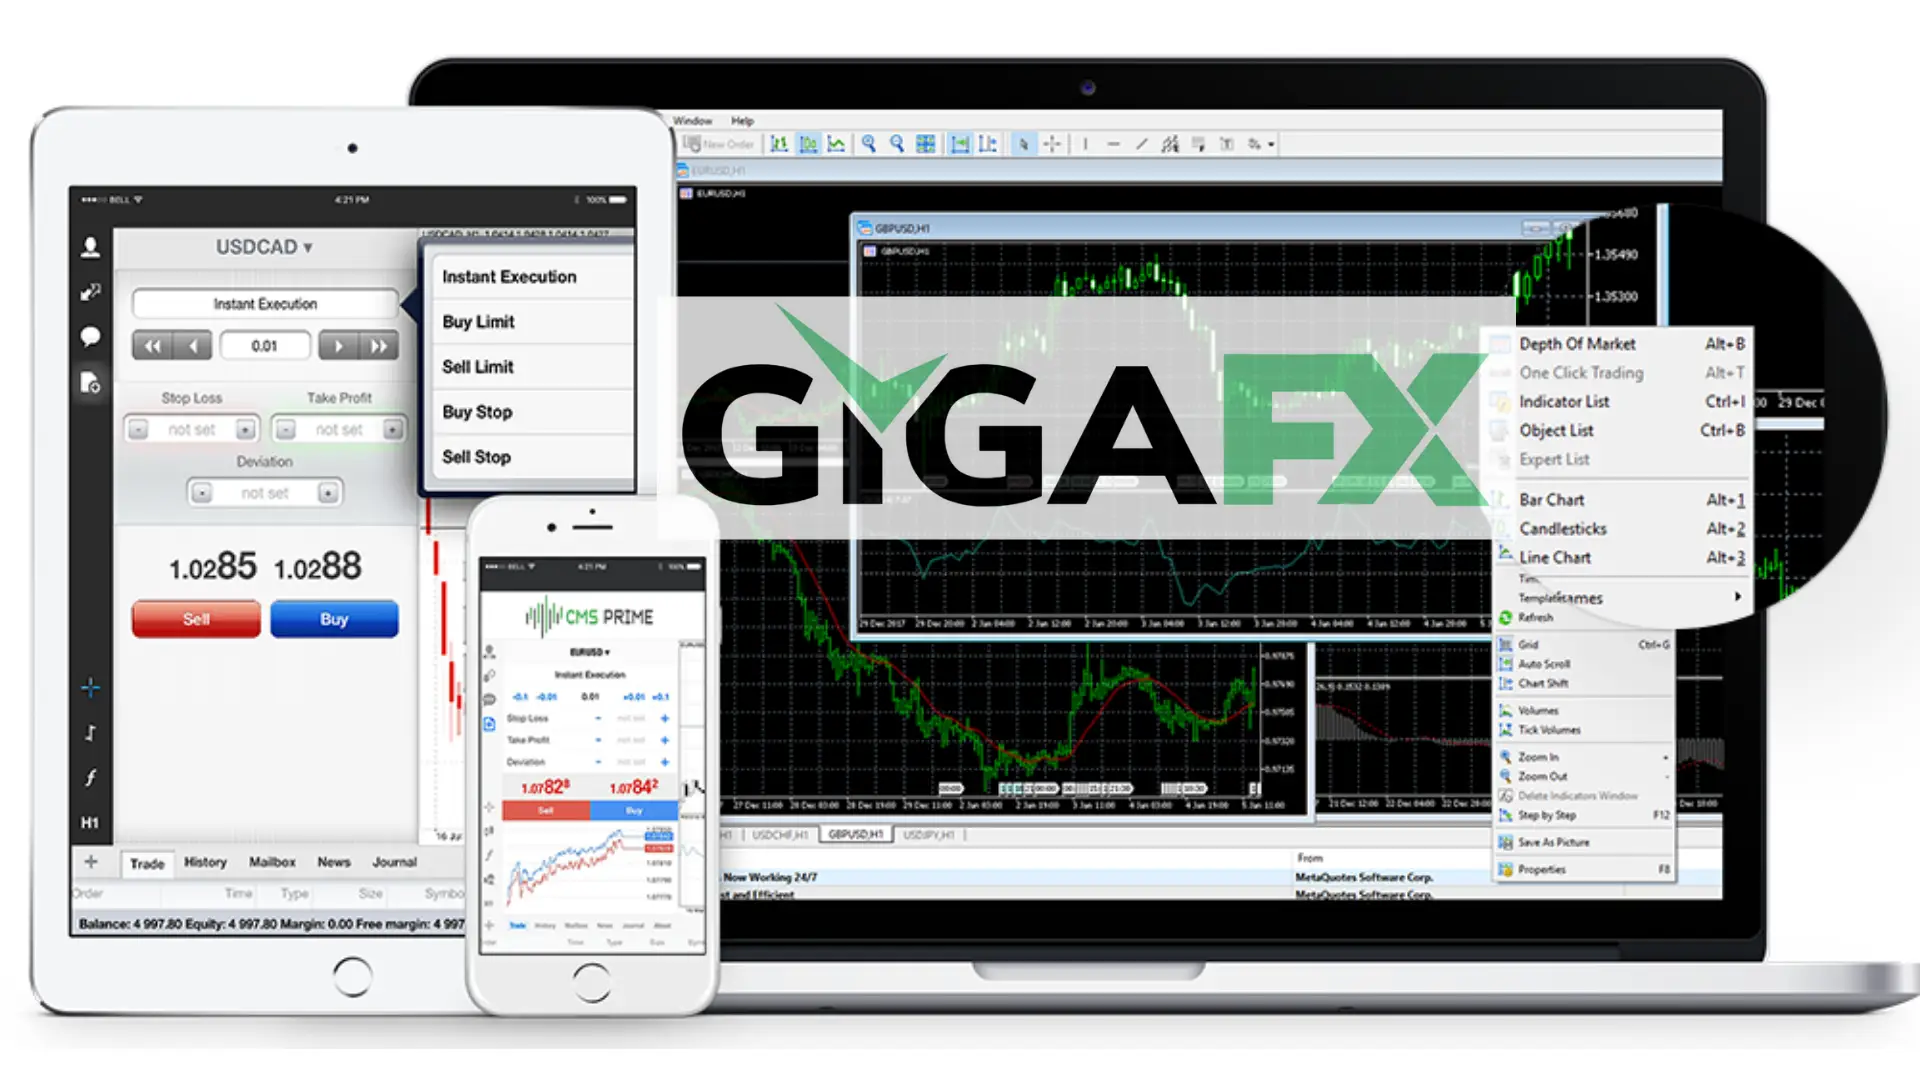 GigaFX - trading platform with advanced tools